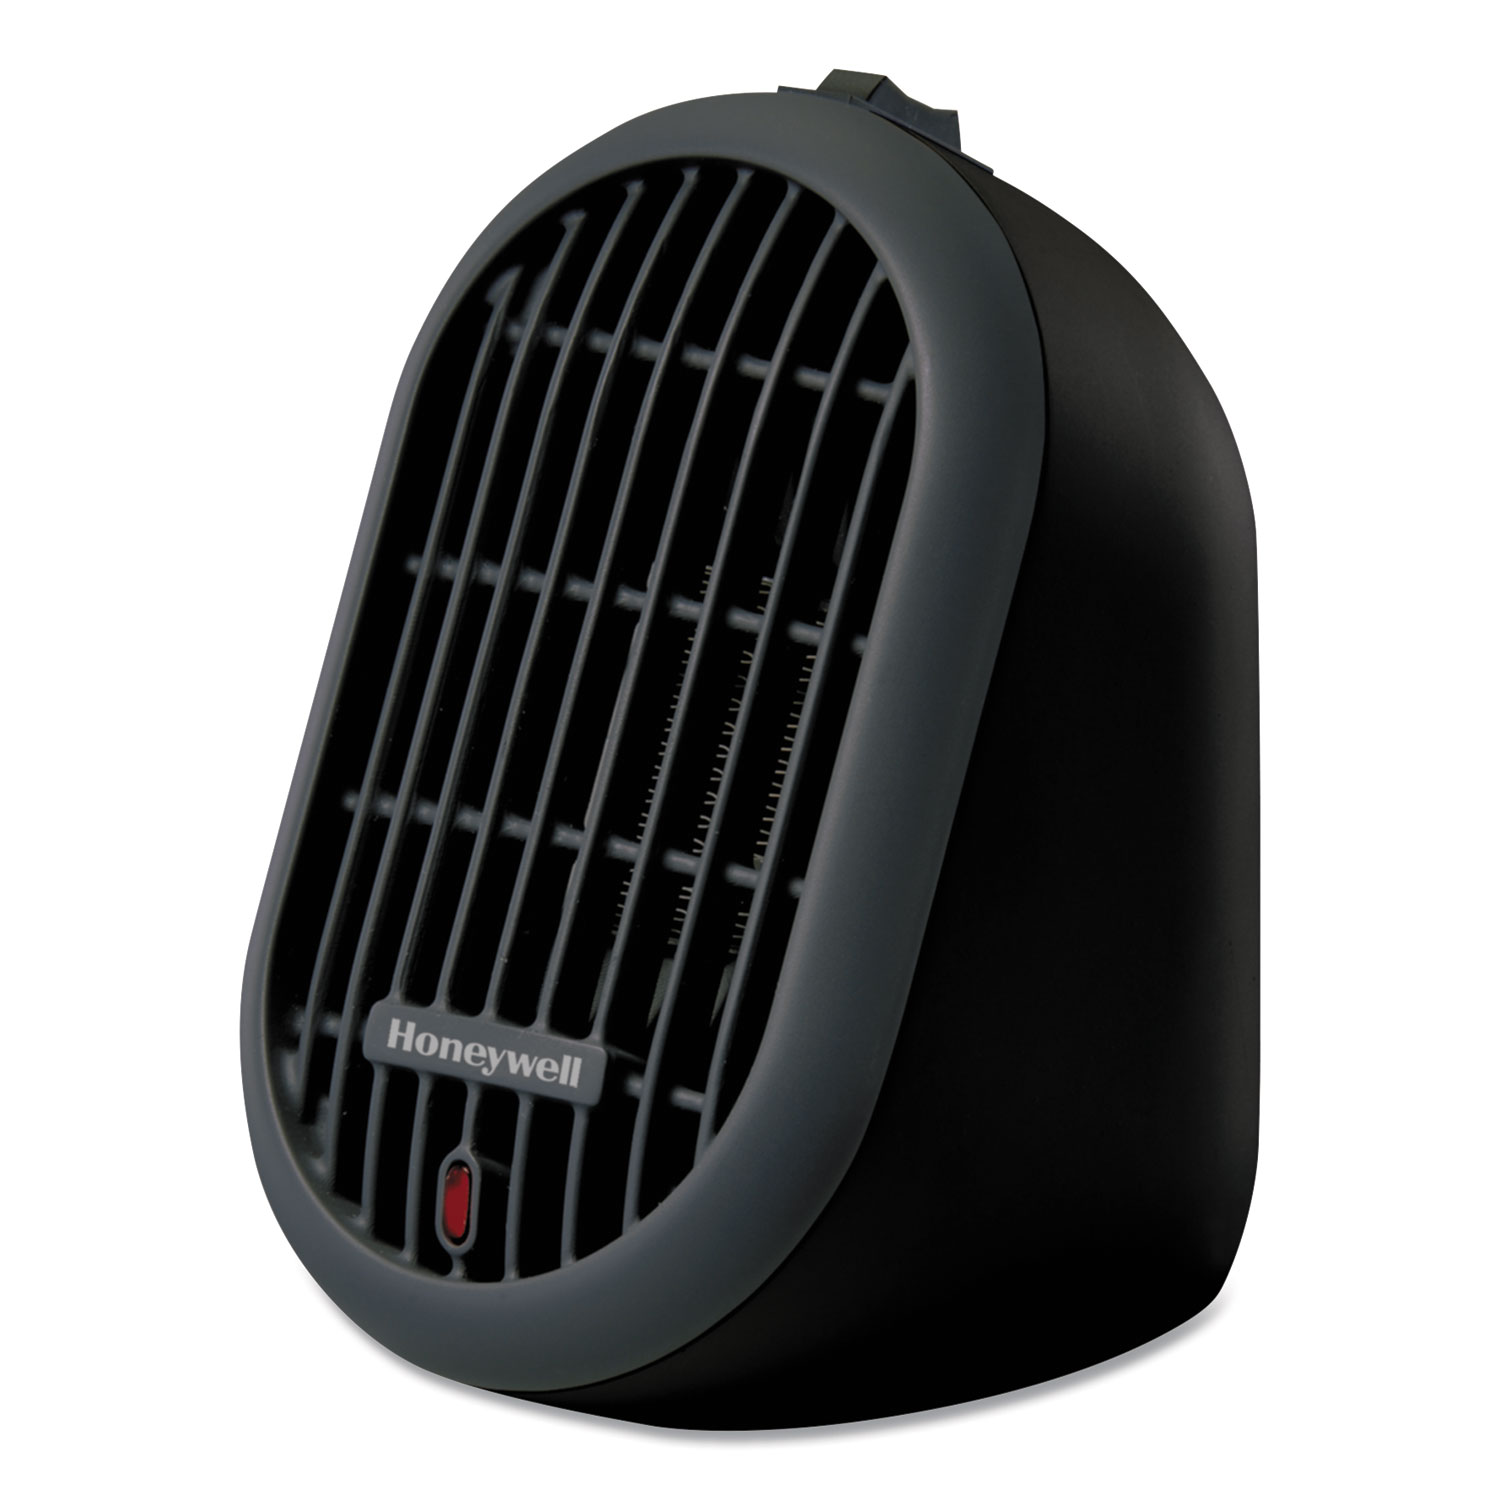  Honeywell HCE100B Heat Bud Personal Heater, 250 W, 4.14 x 4.33 x 6.5, Black (HWLHCE100B) 